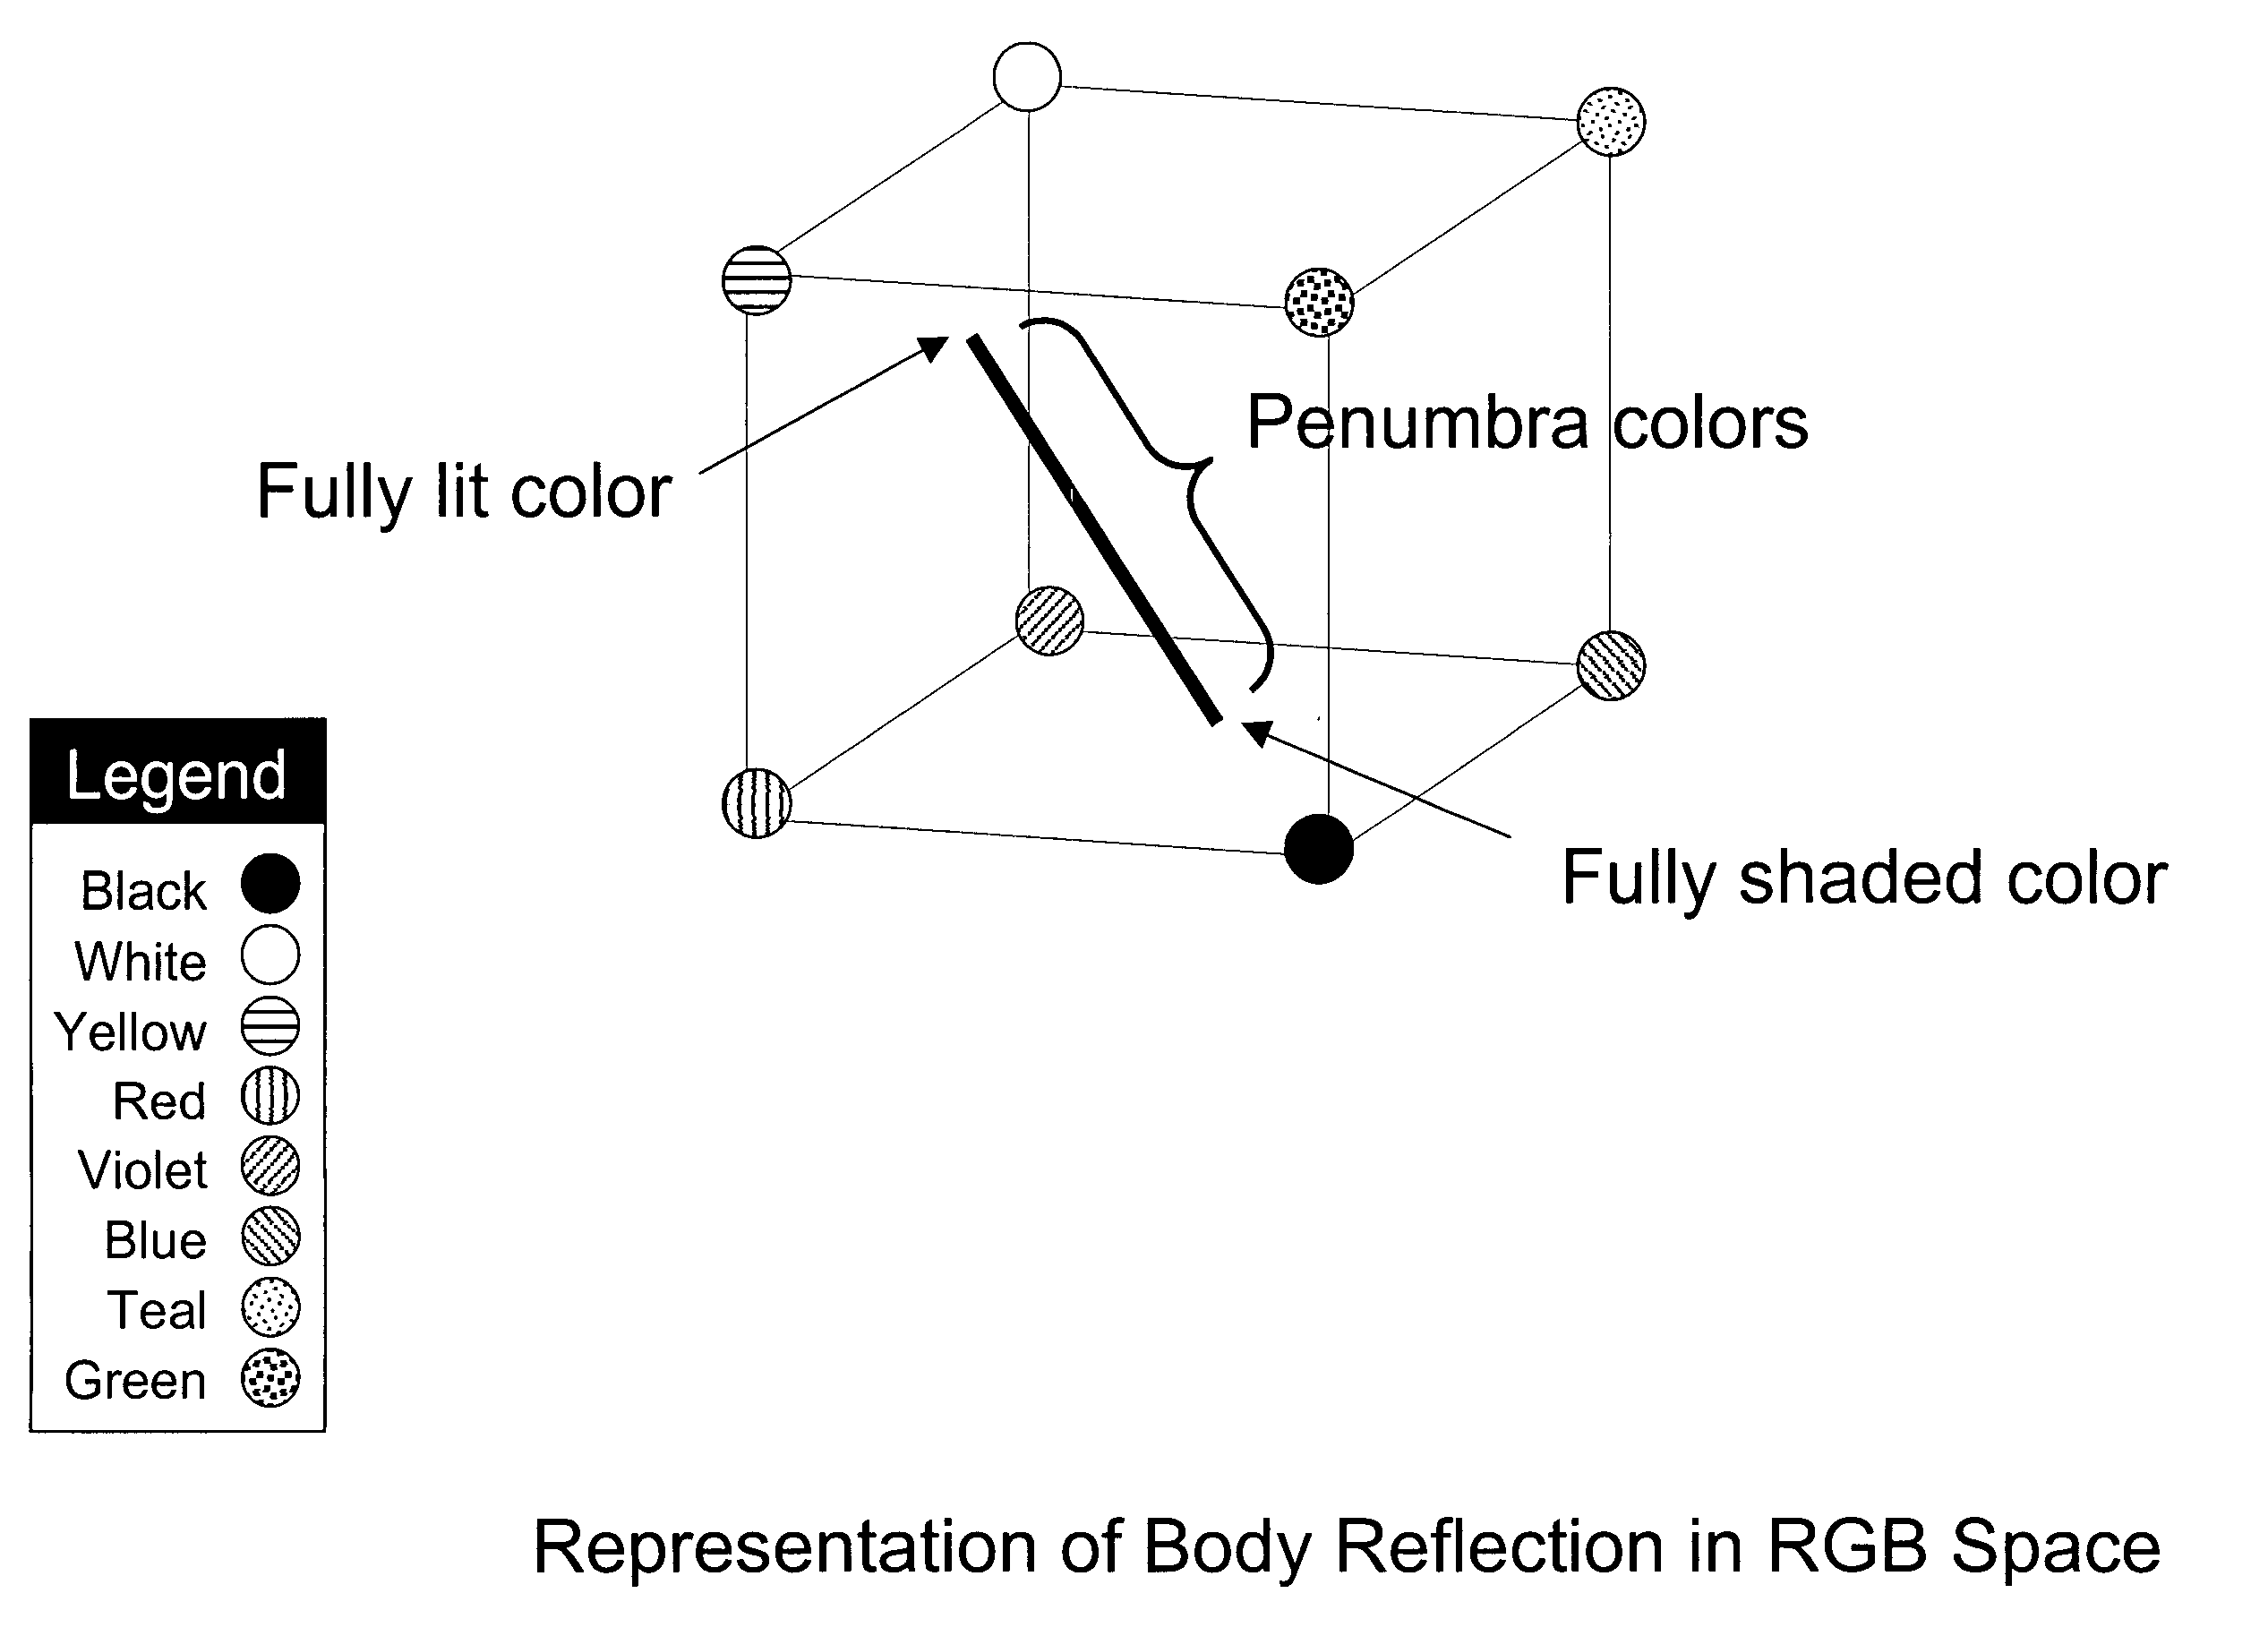 Bi-illuminant dichromatic reflection model for image manipulation